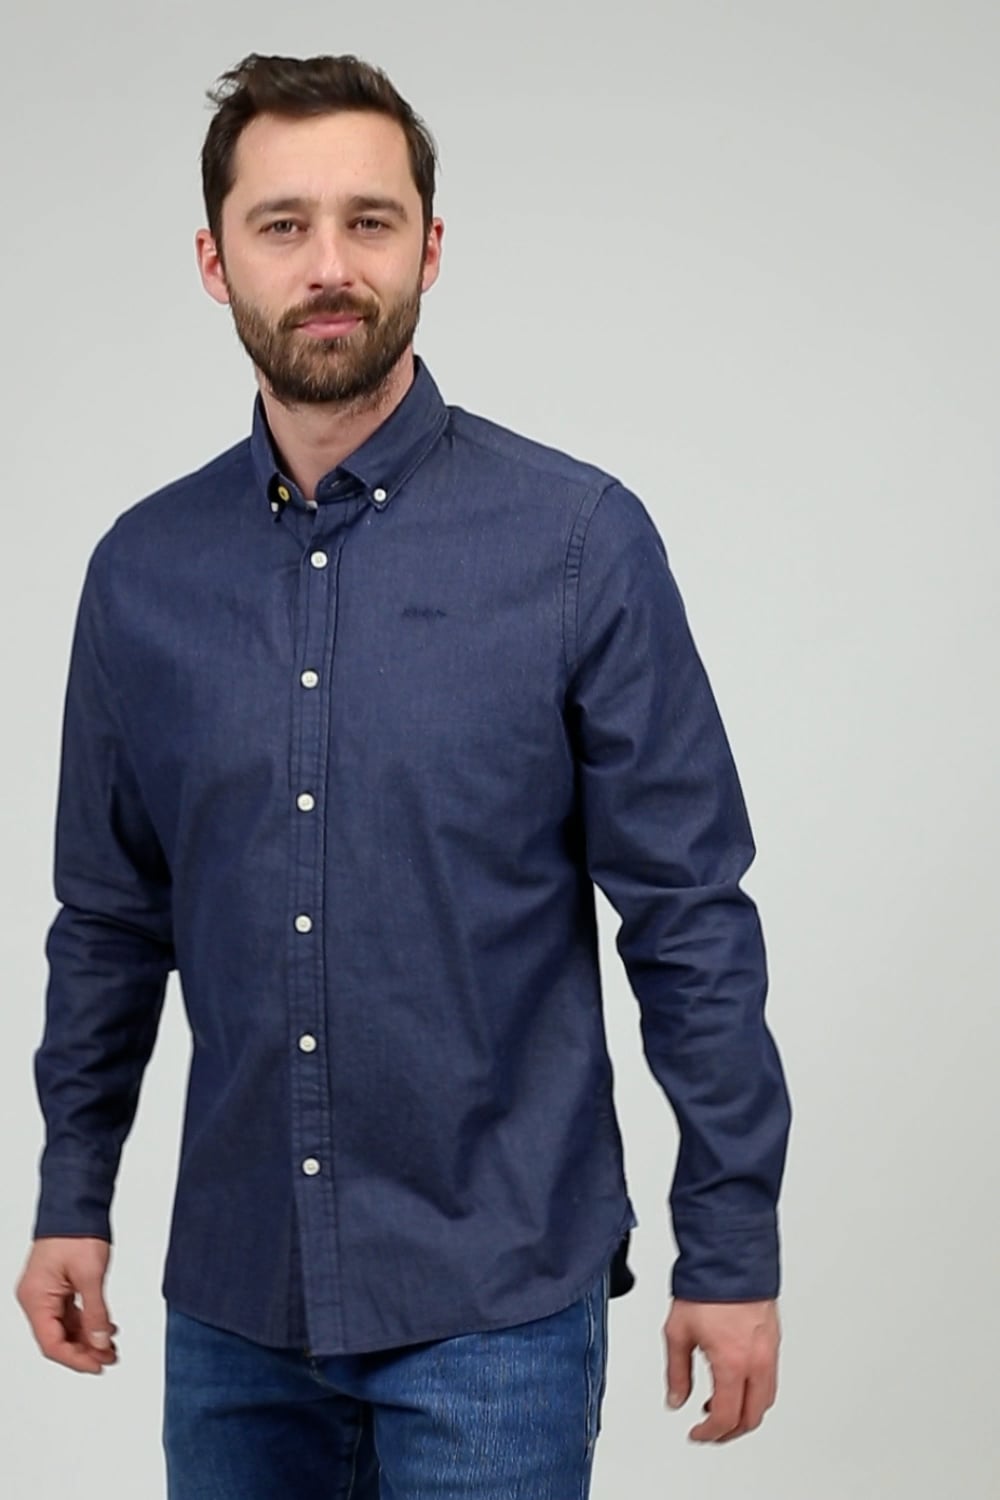 NZA Shirt Upper Mangatawhiri Dark Blue 22HN509 order online | Suitable